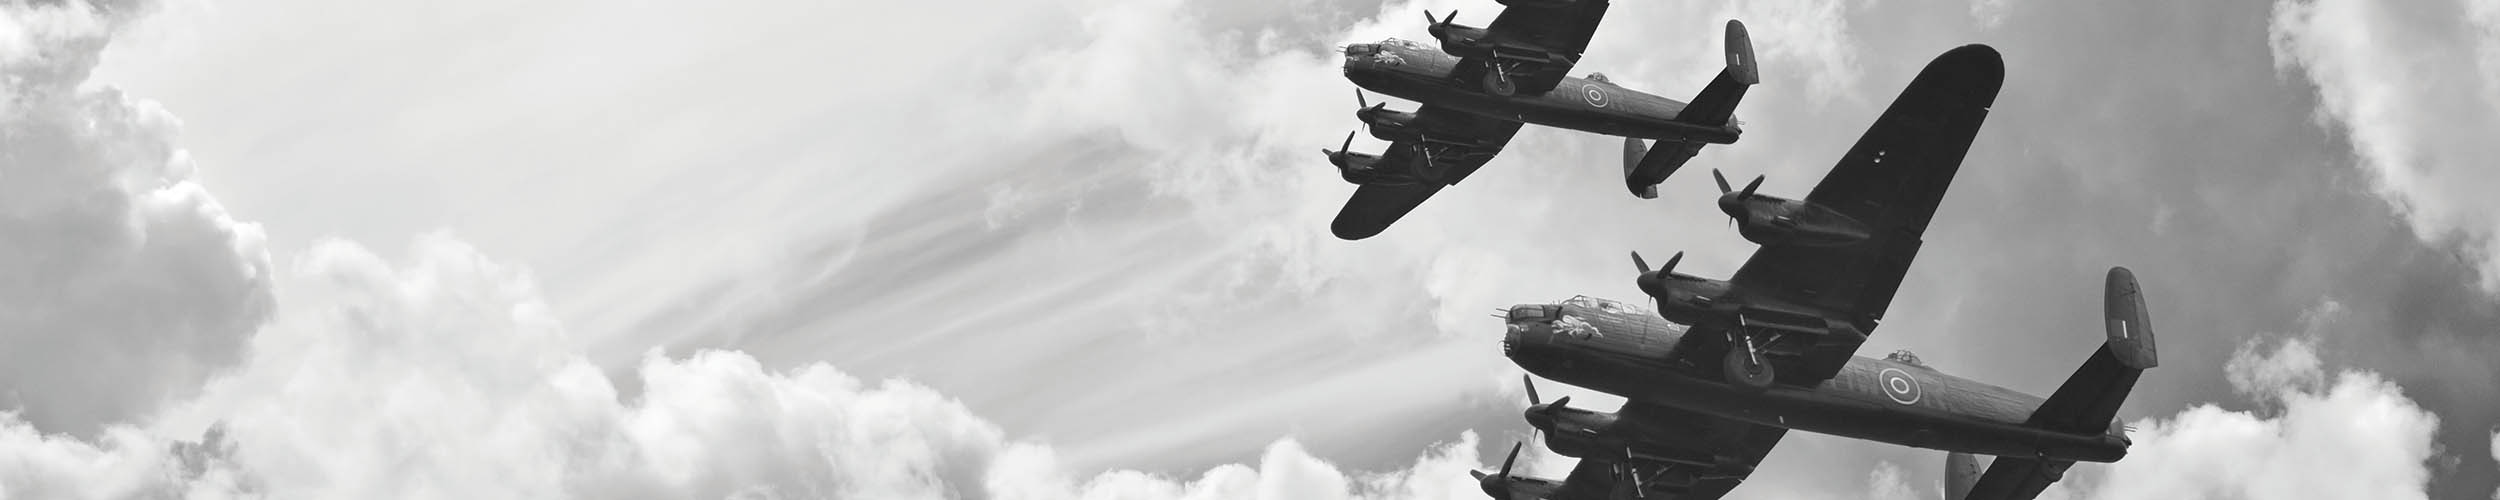 World War II era planes